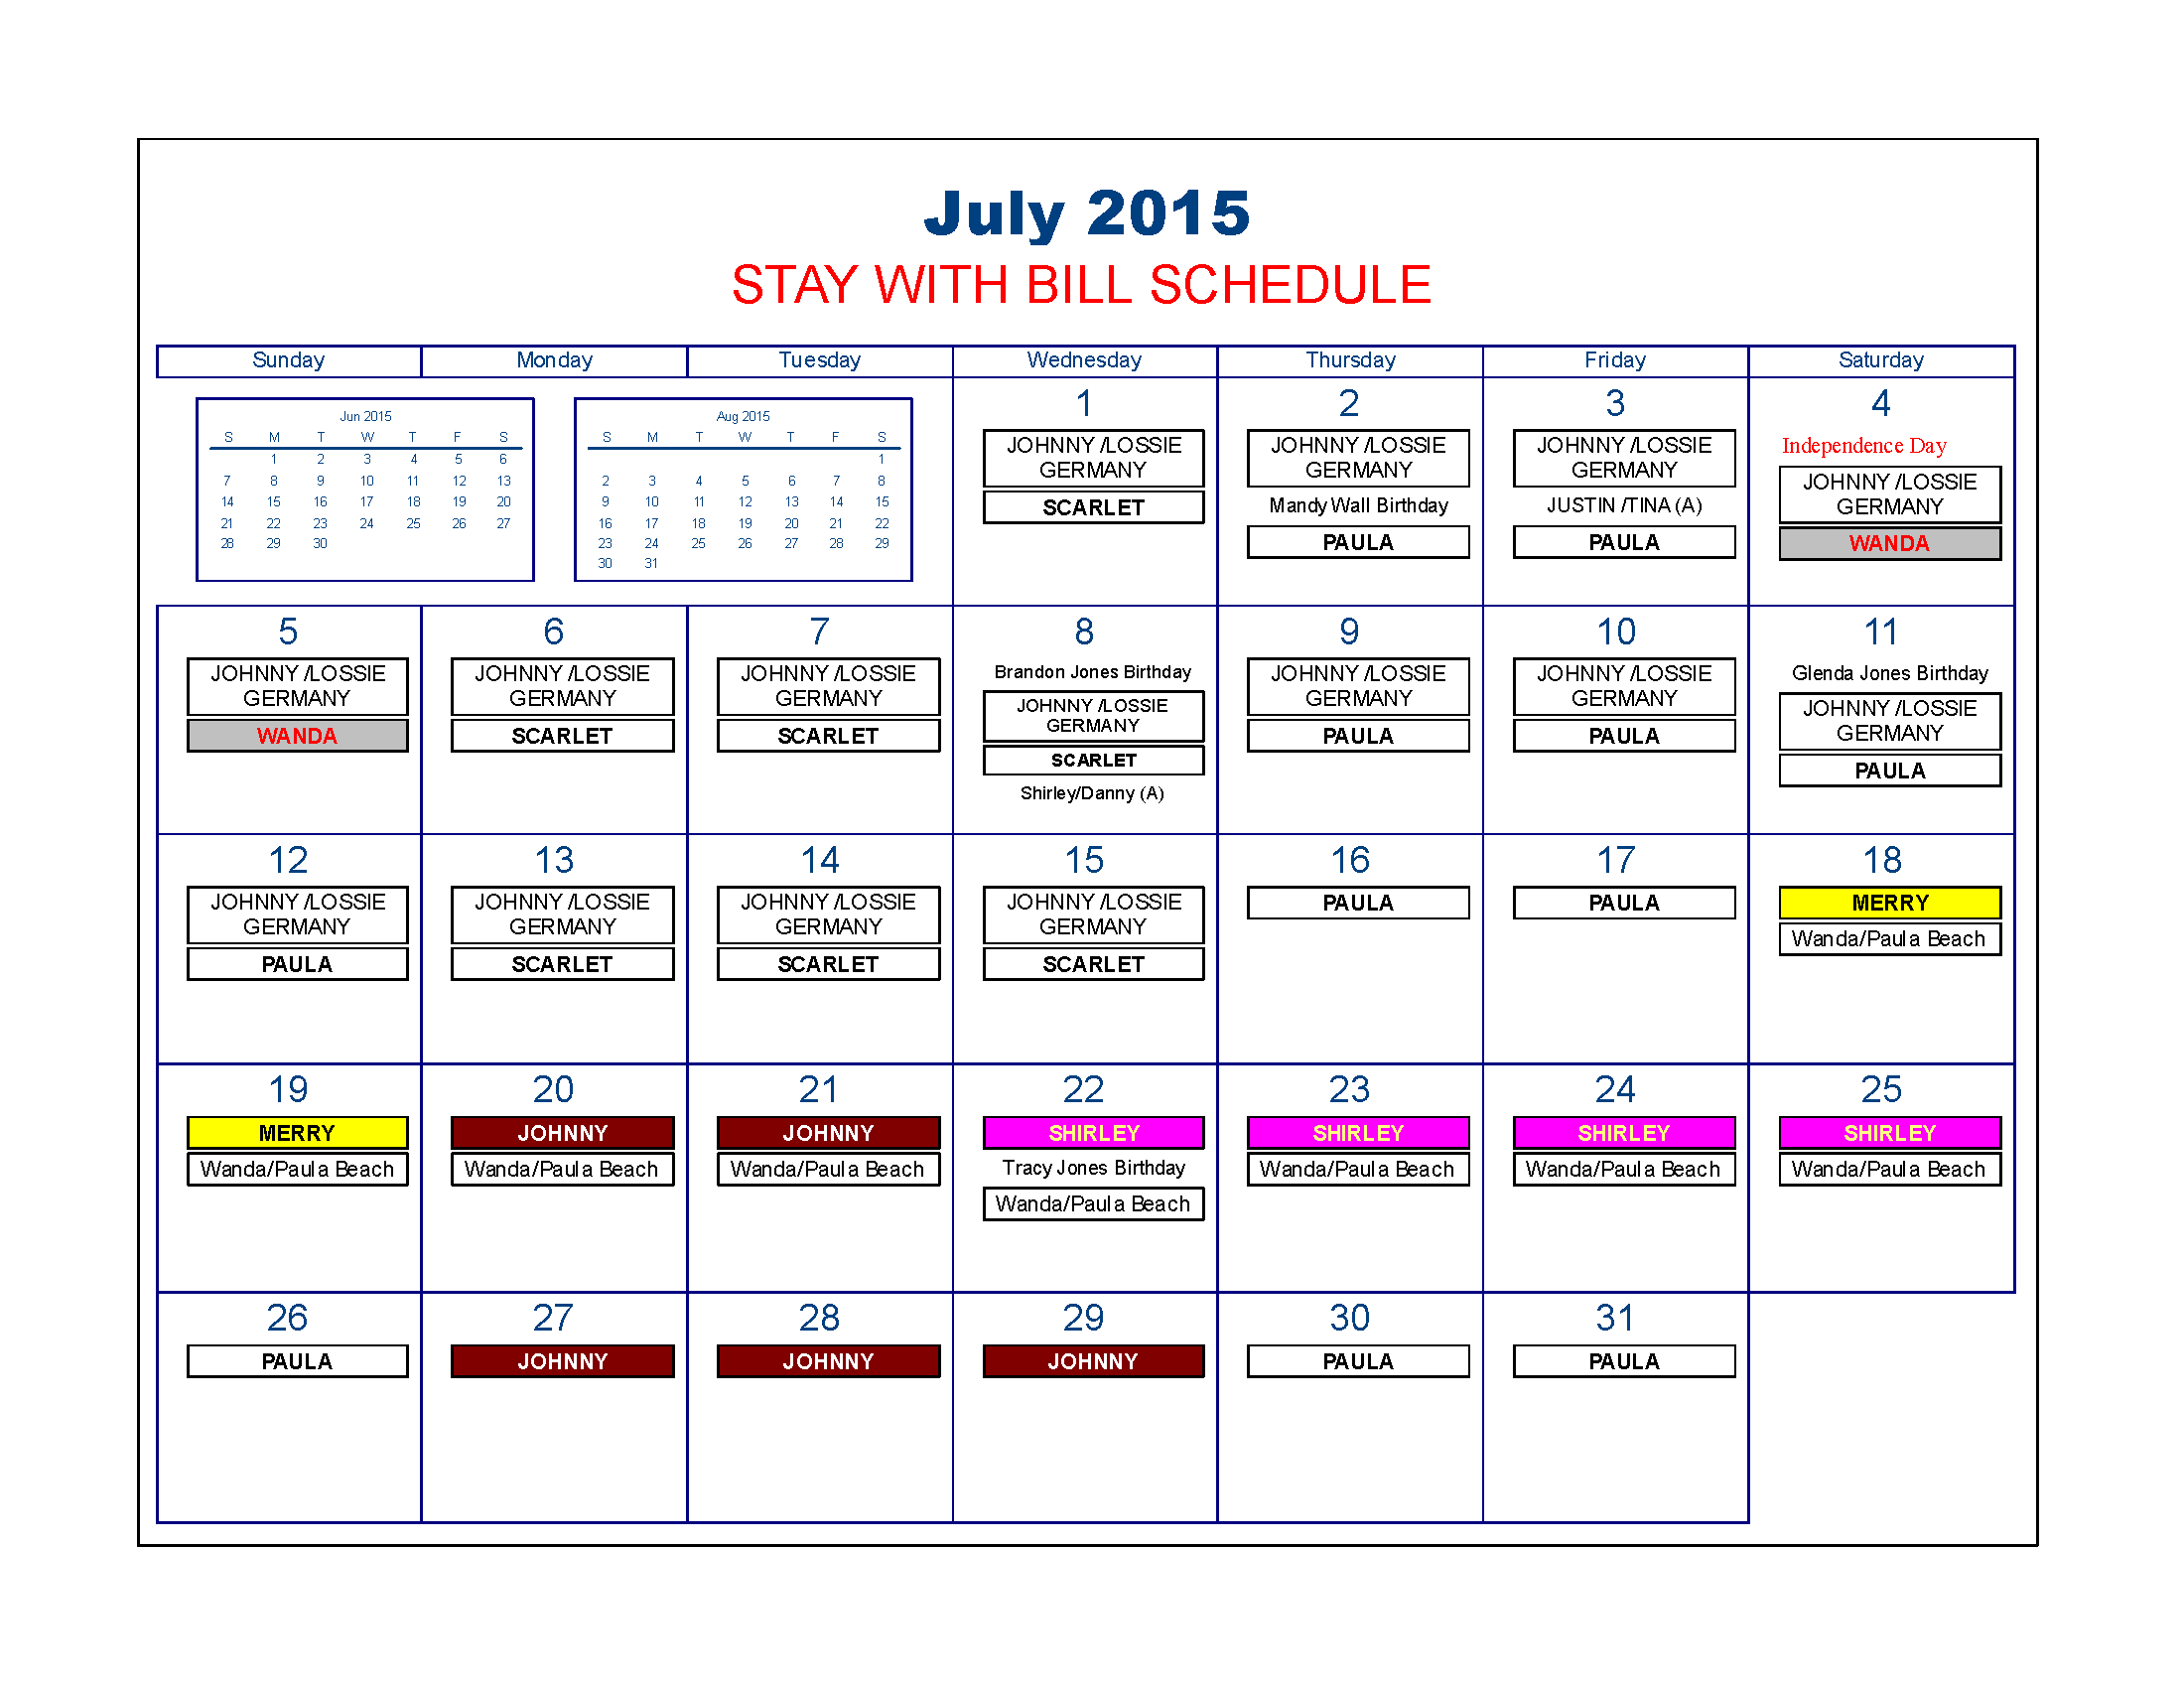 15July Bill Schedule